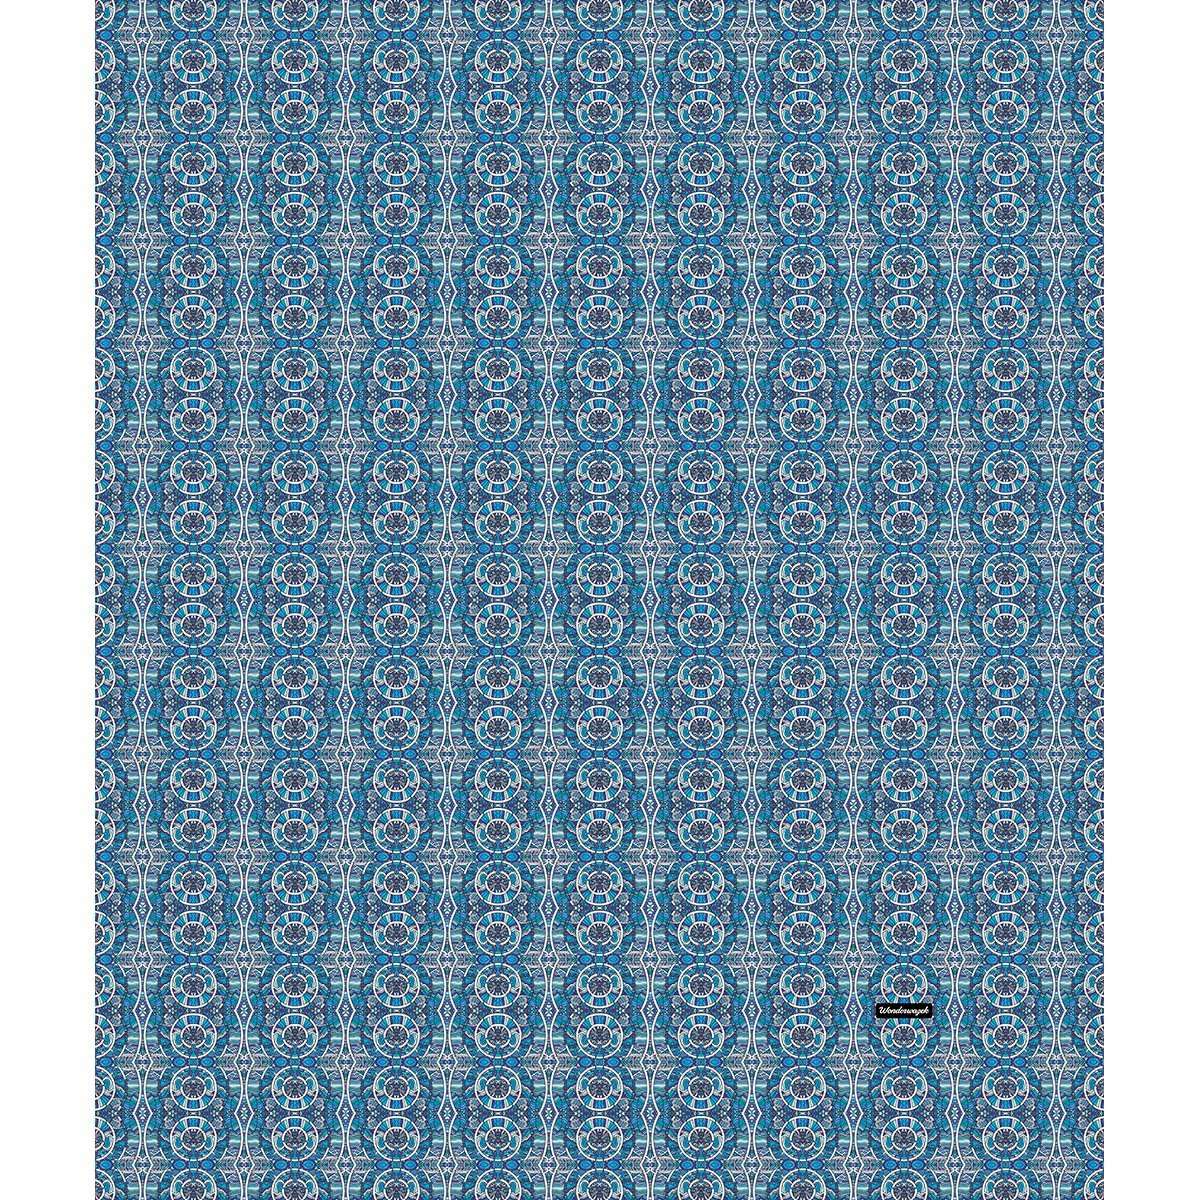 Decke • Kreiswelle – Variation 2, blau, weiß - Wonderwazek